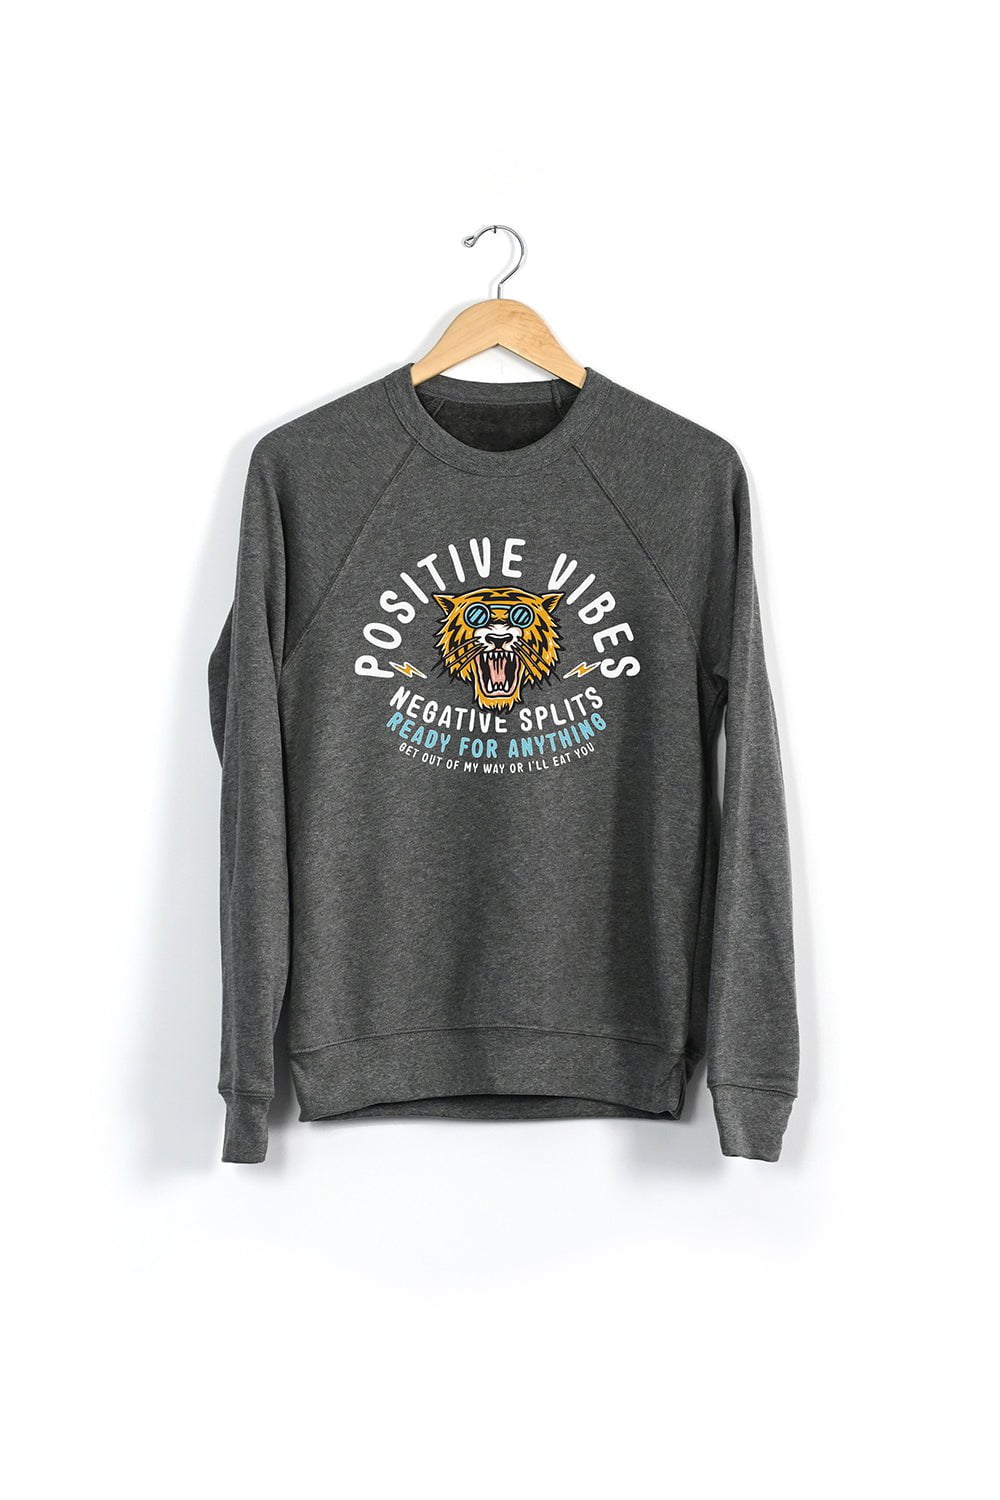 Sarah Marie Design Studio Sweatshirt Positive Vibes, Negative Splits Tiger Sweatshirt